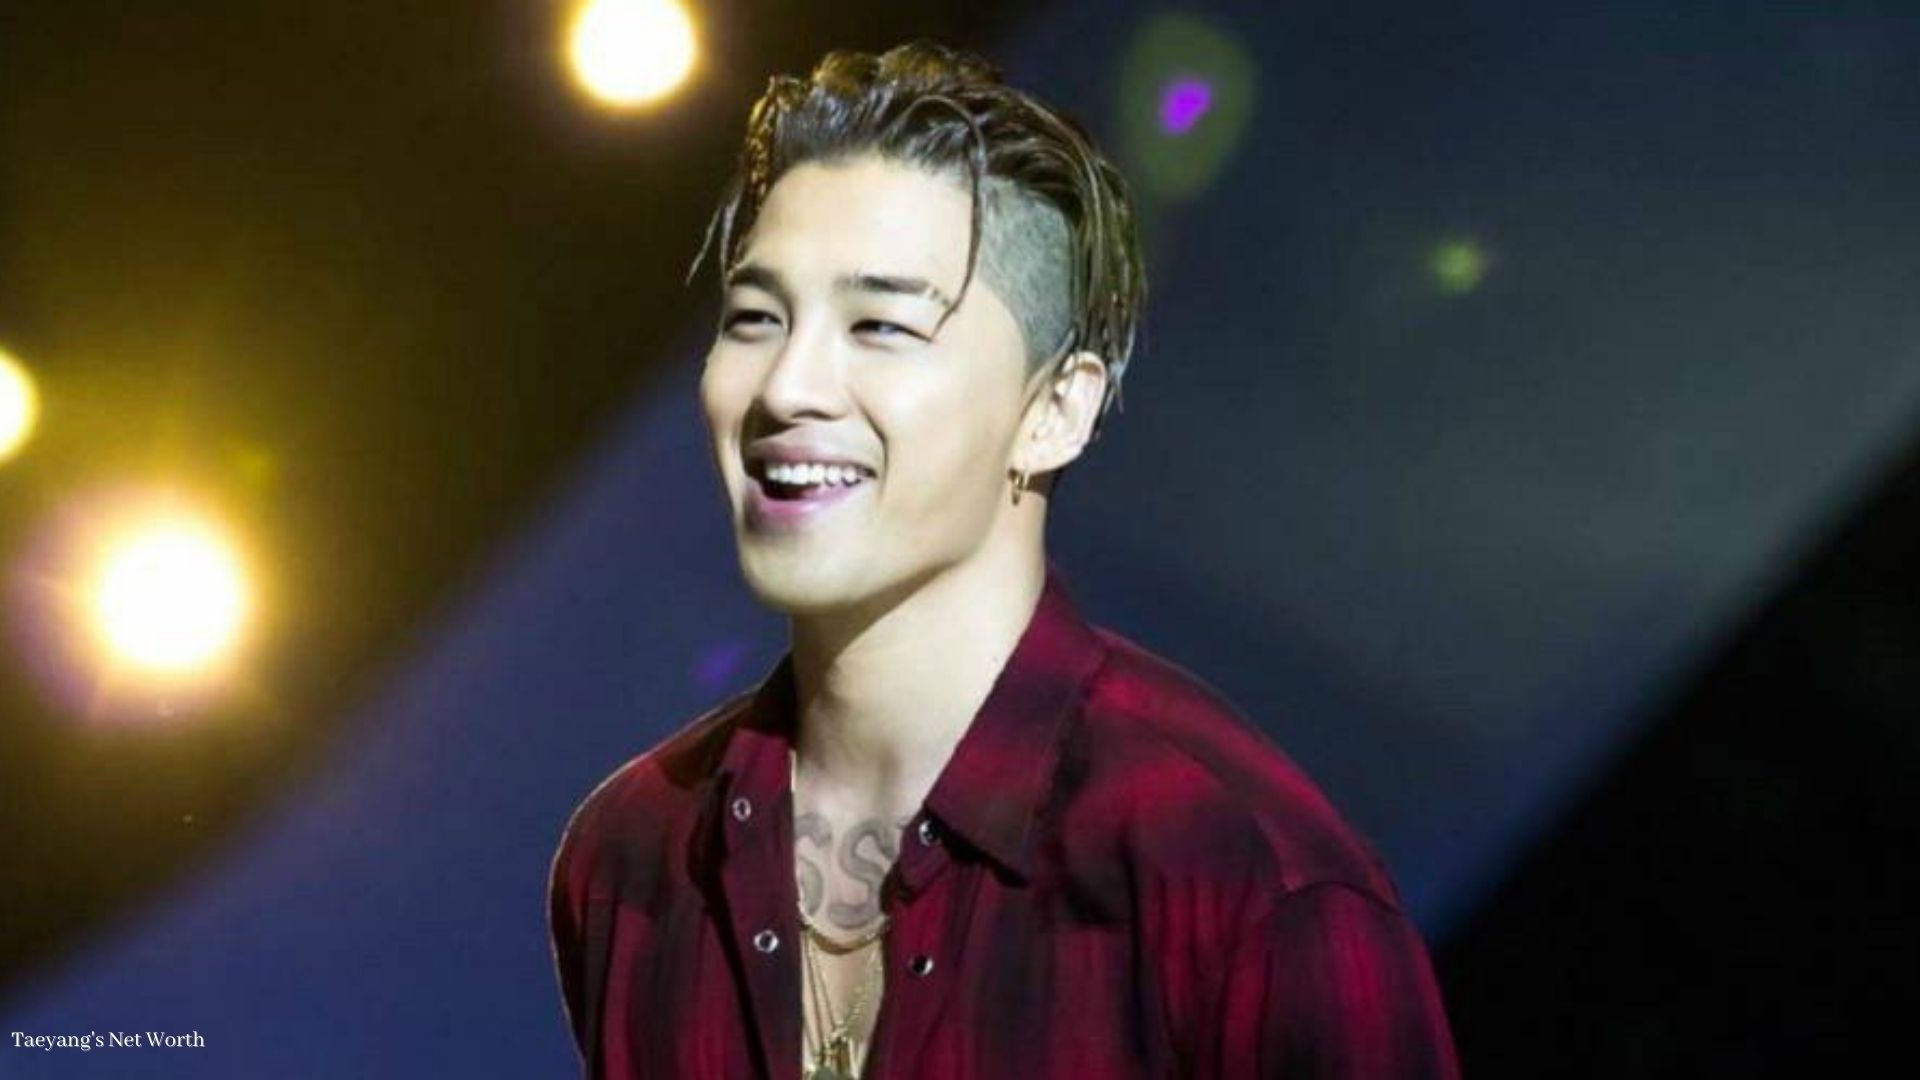 Taeyang’s Net Worth: How Rich Is the BIGBANG Member?